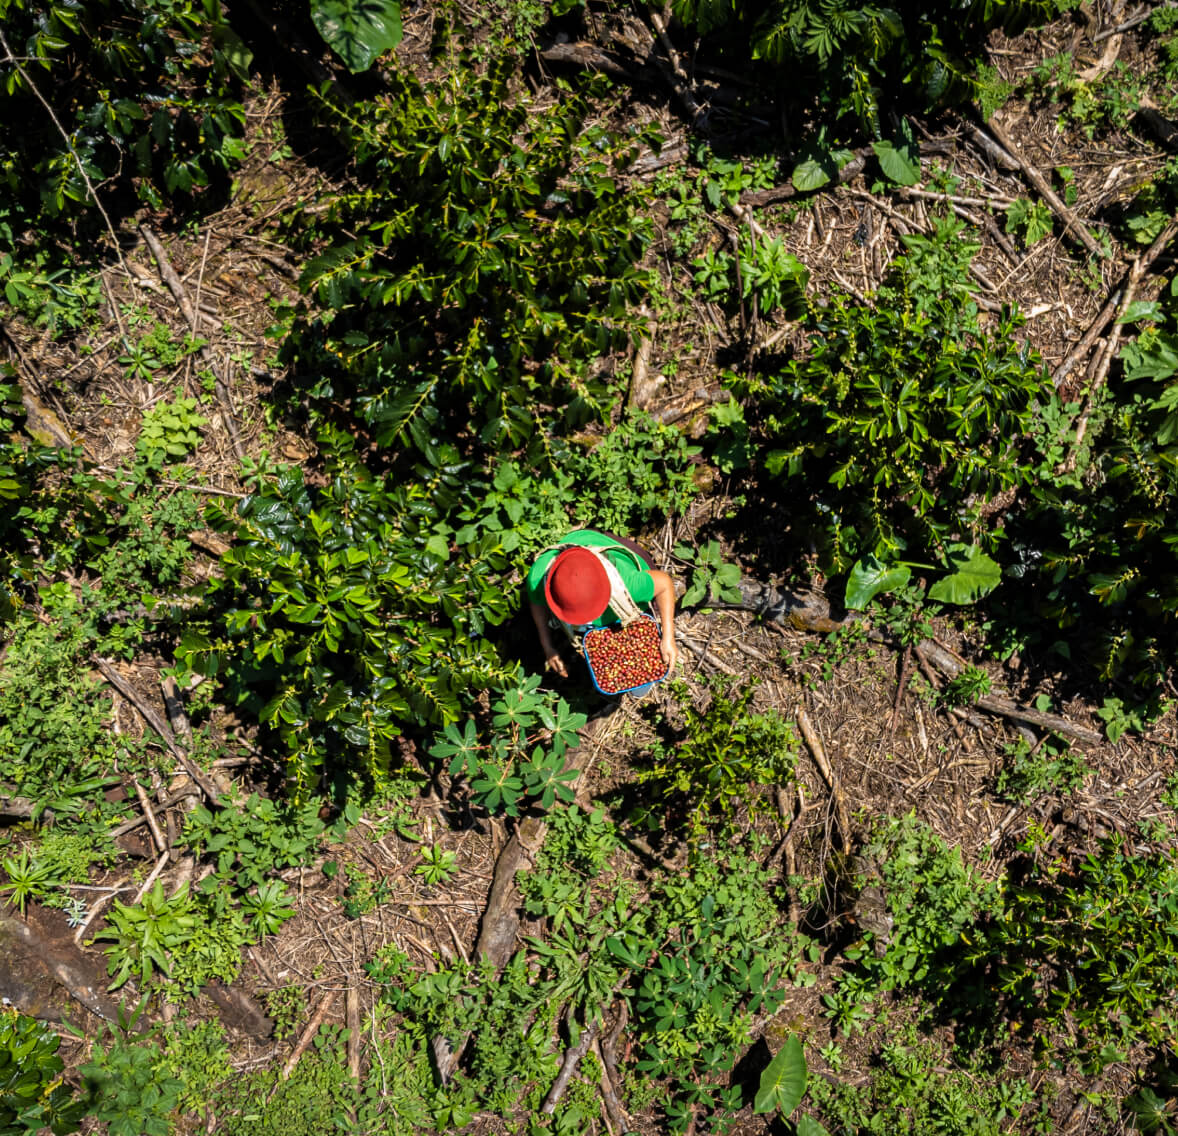  Man in red hat walking through forest.